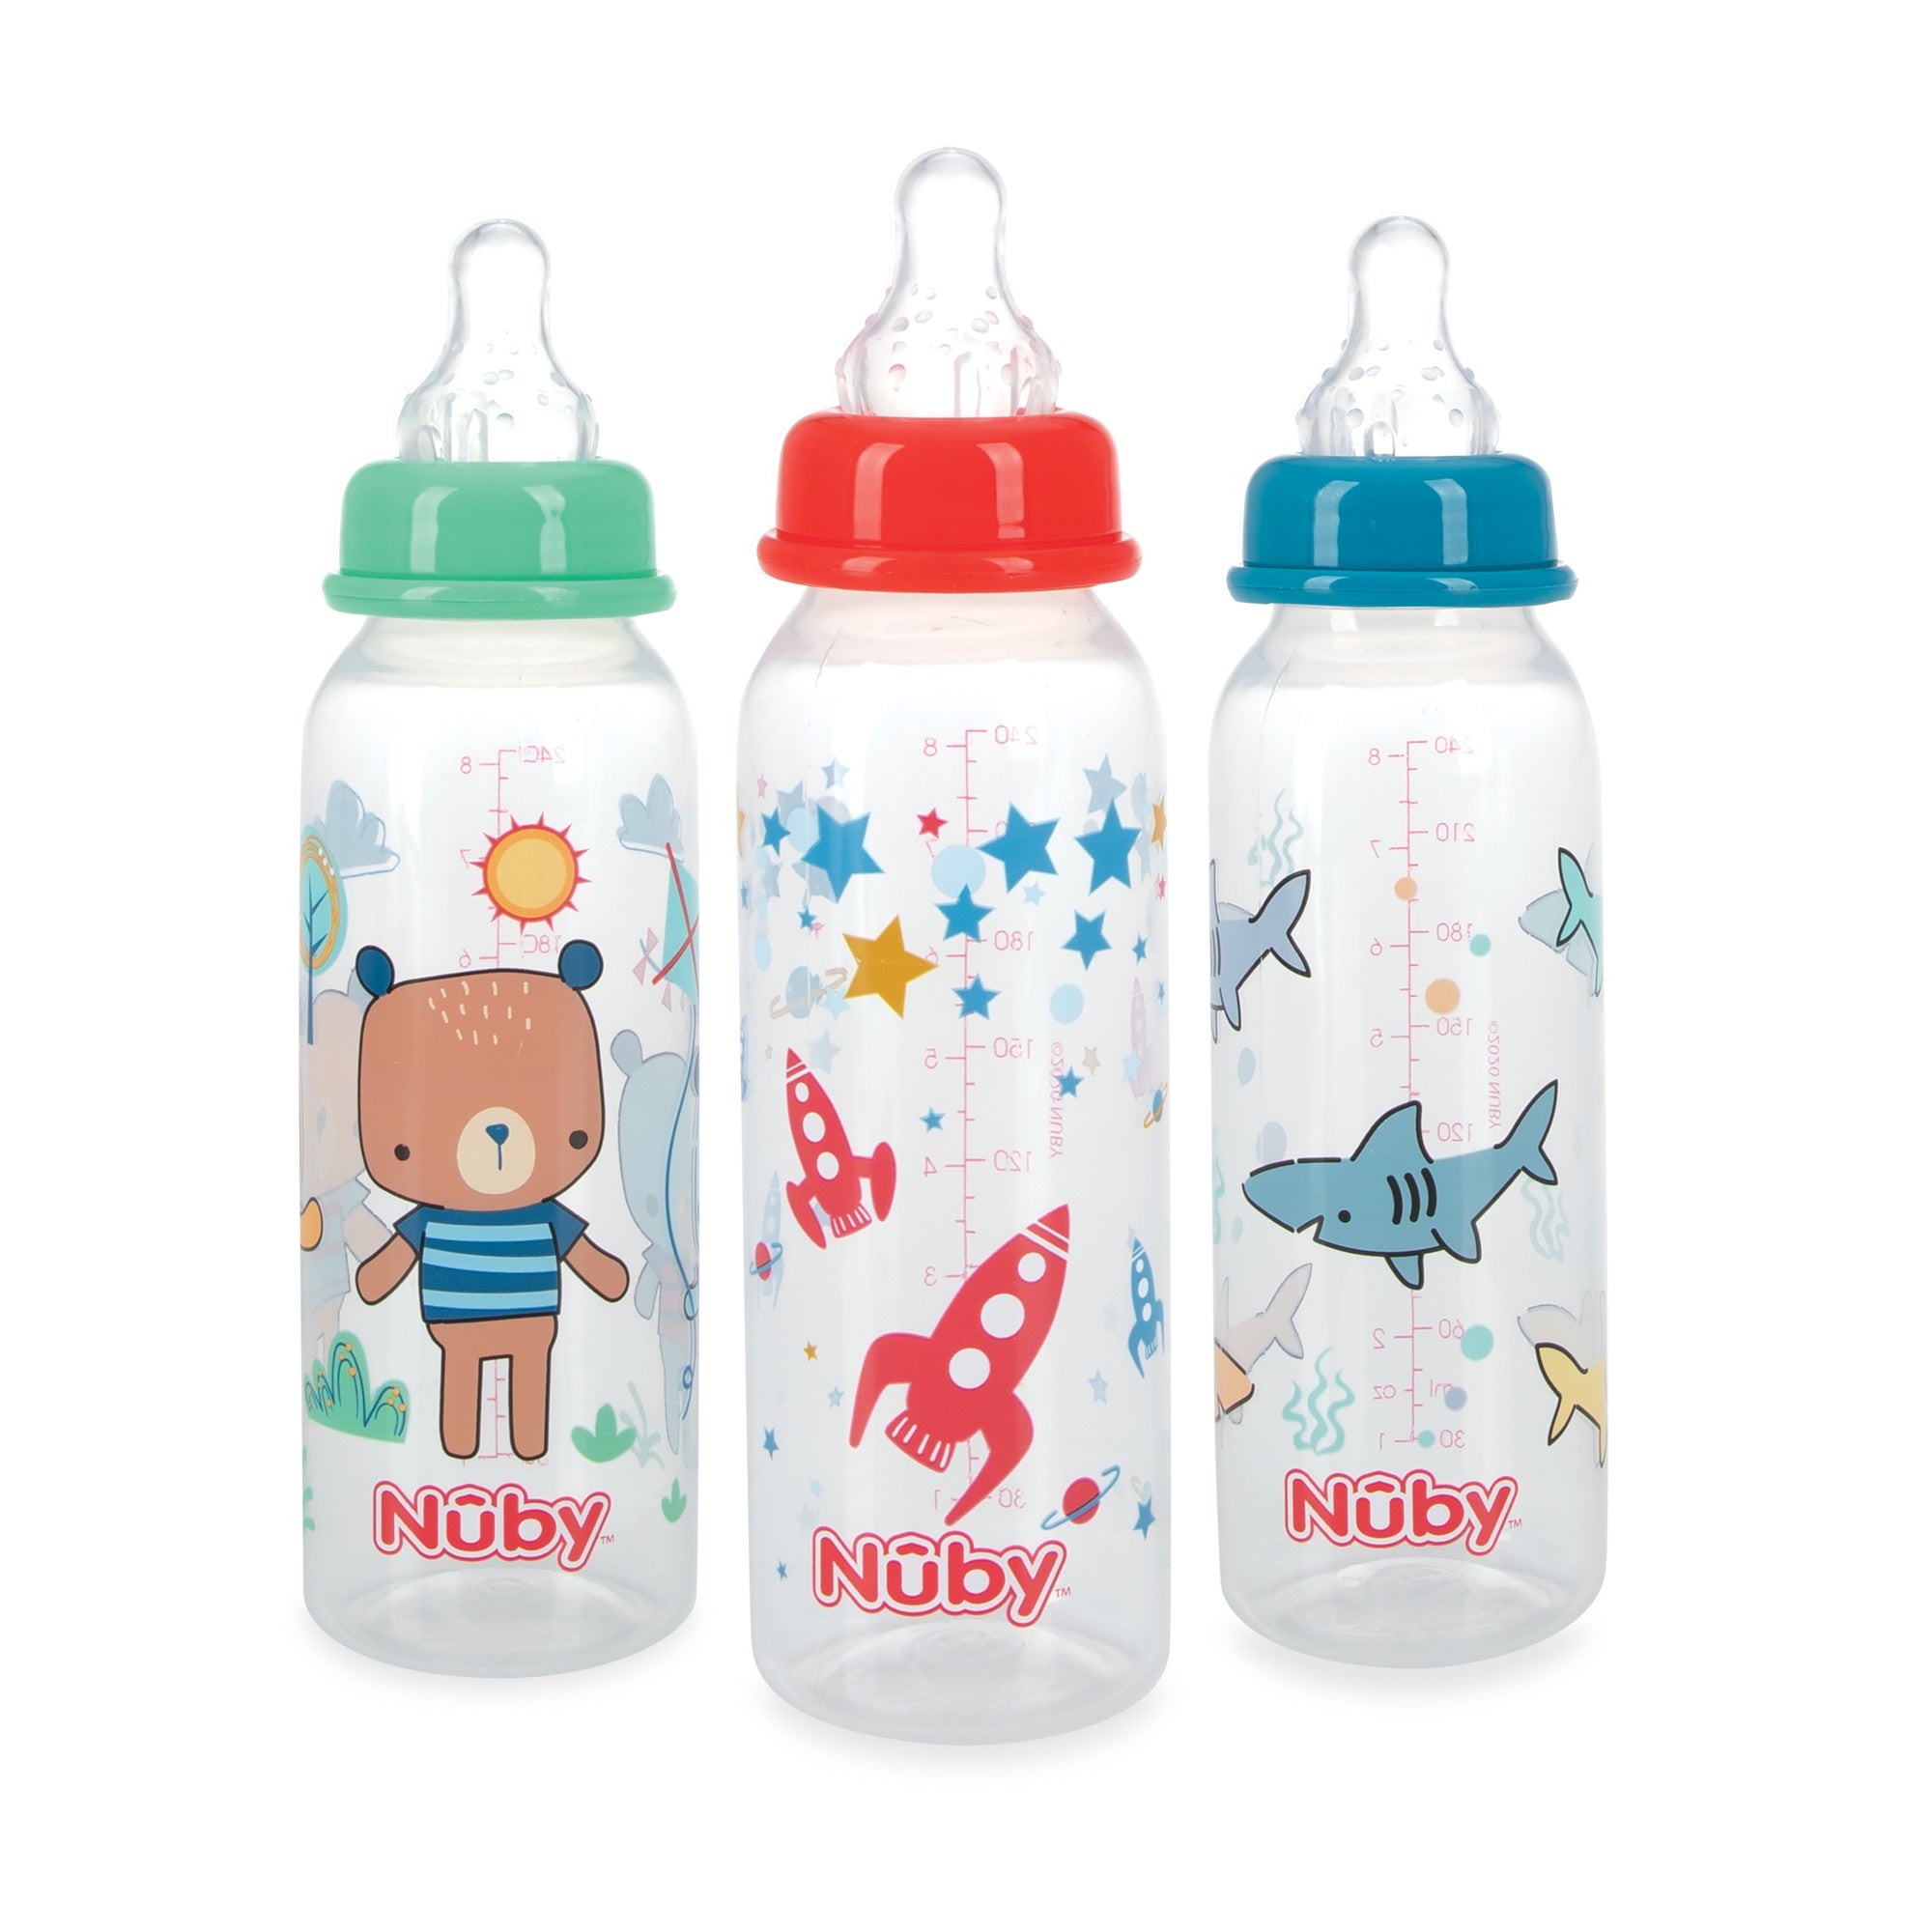 Save on Dr. Brown's Natural Flow Baby Bottles Standard BPA Free 8